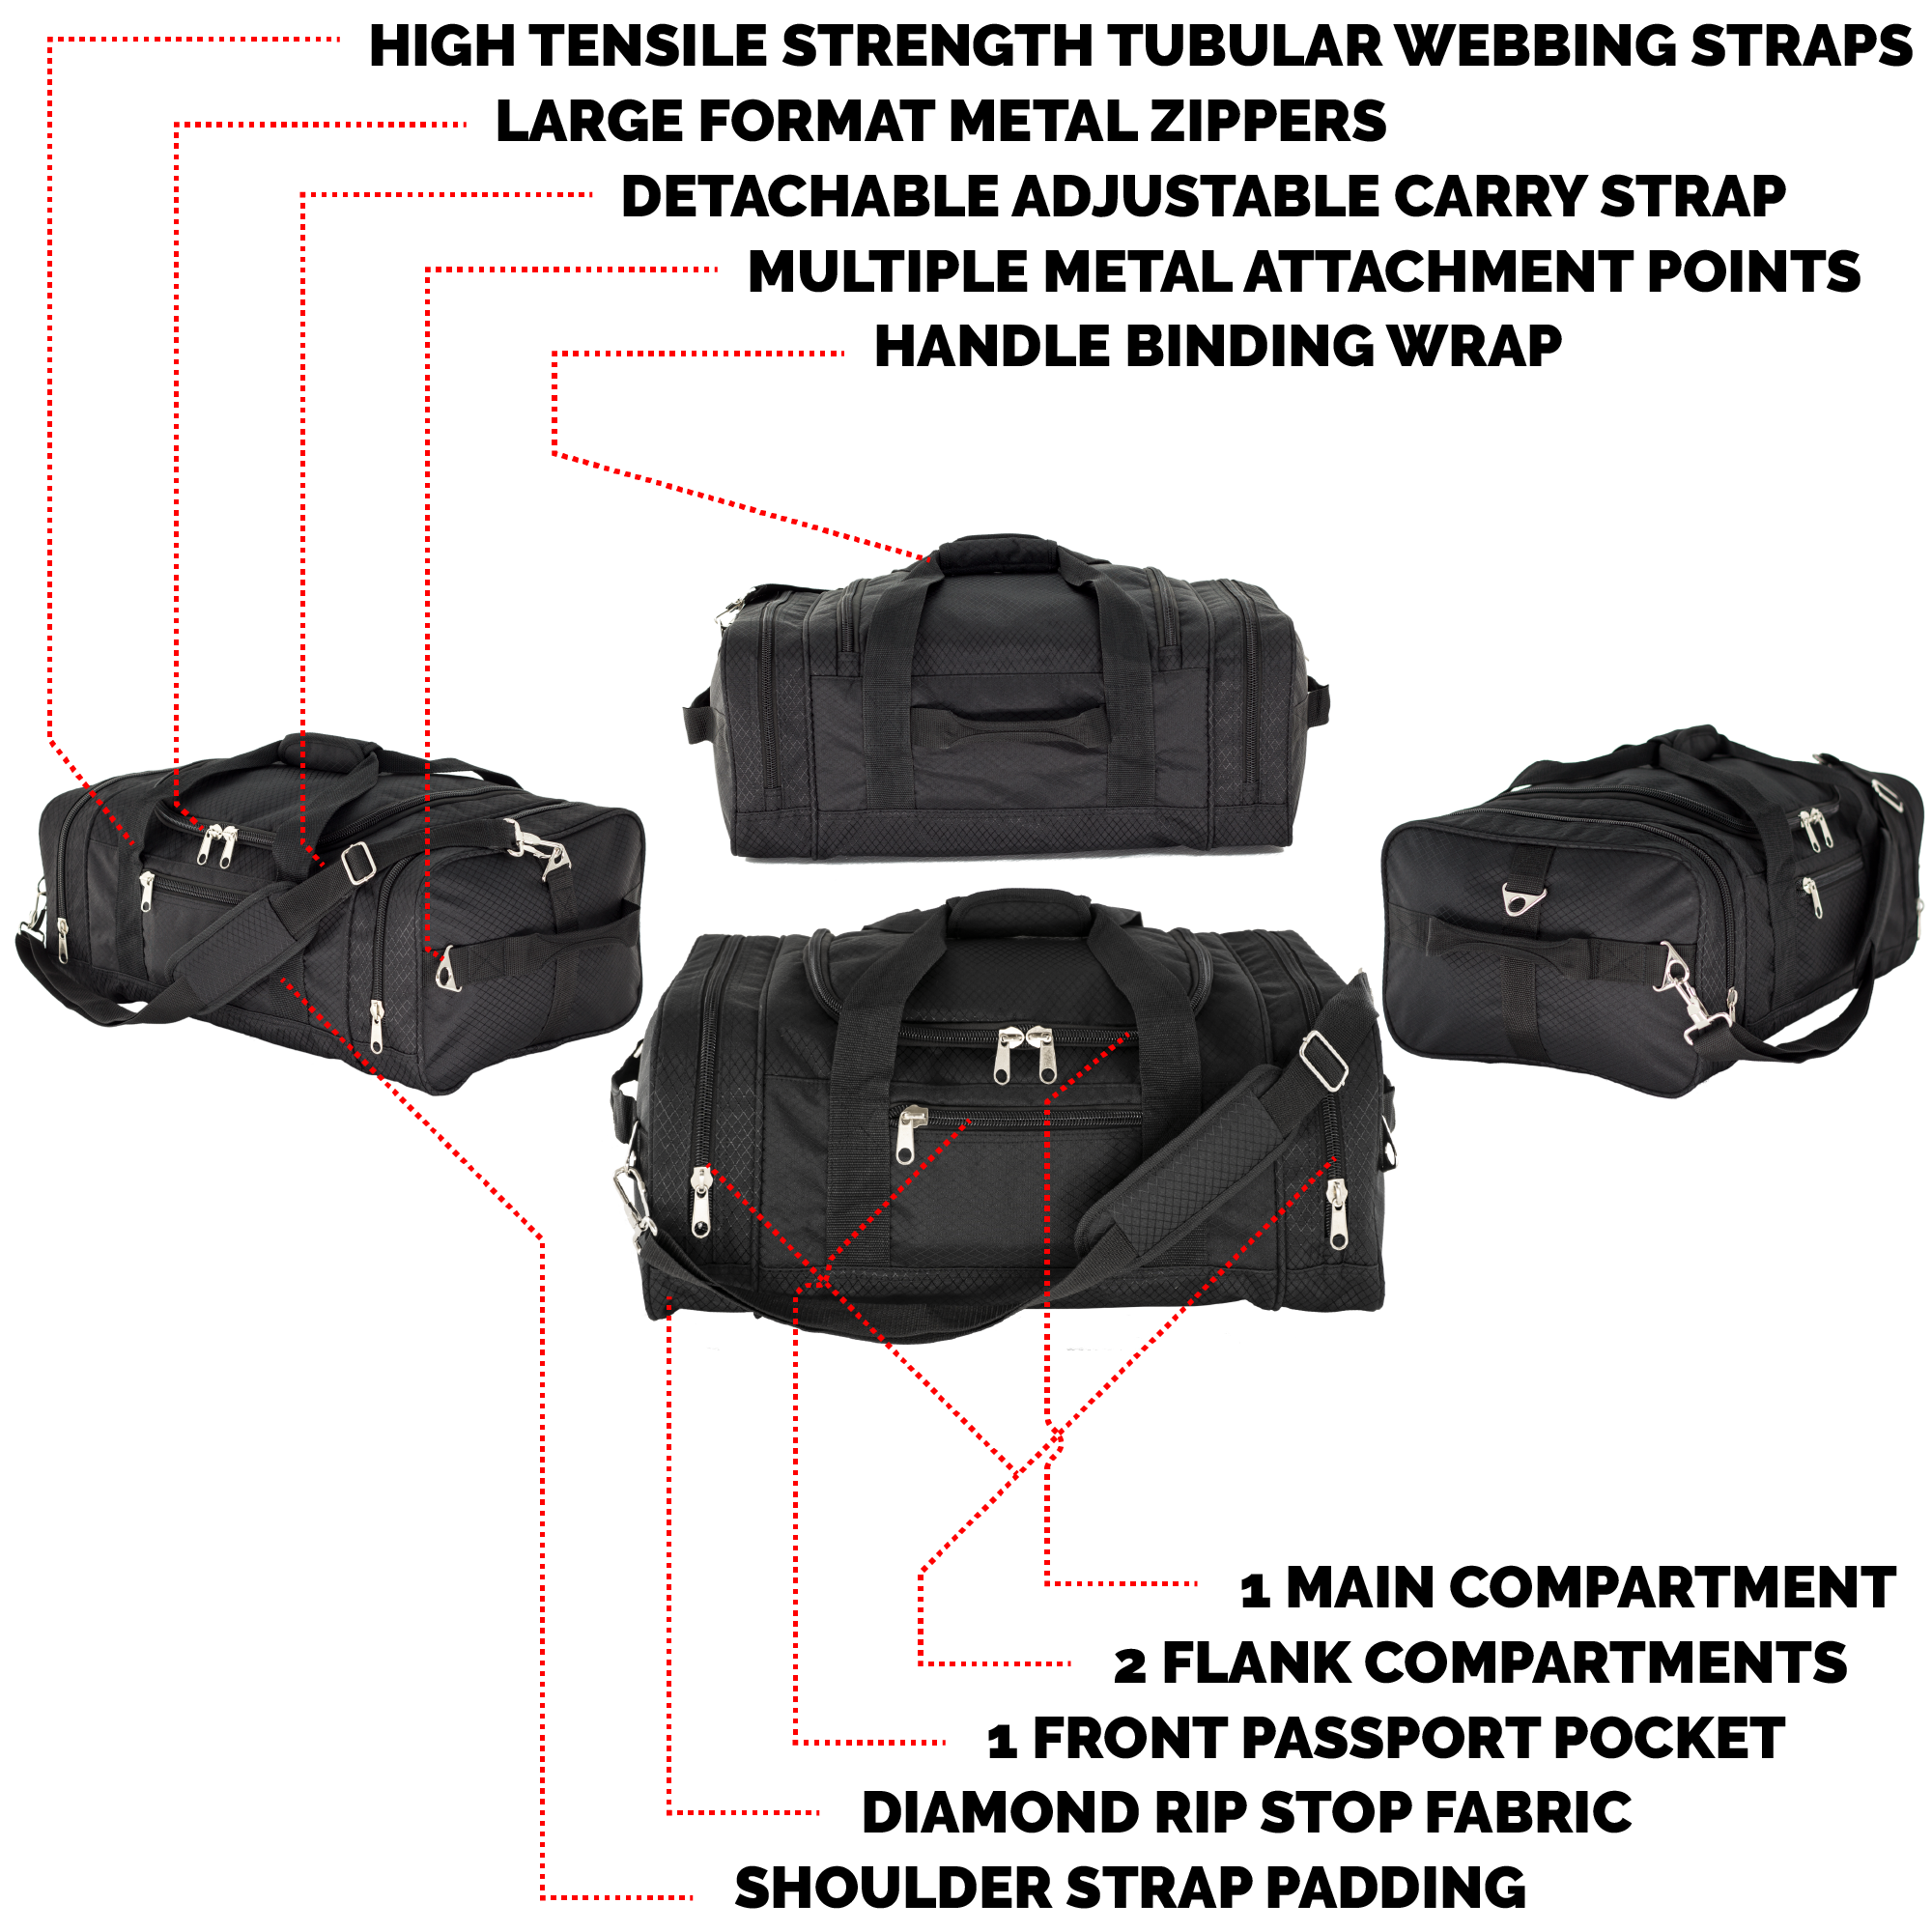 North Star Bags Flight Dual Carry Bag Black